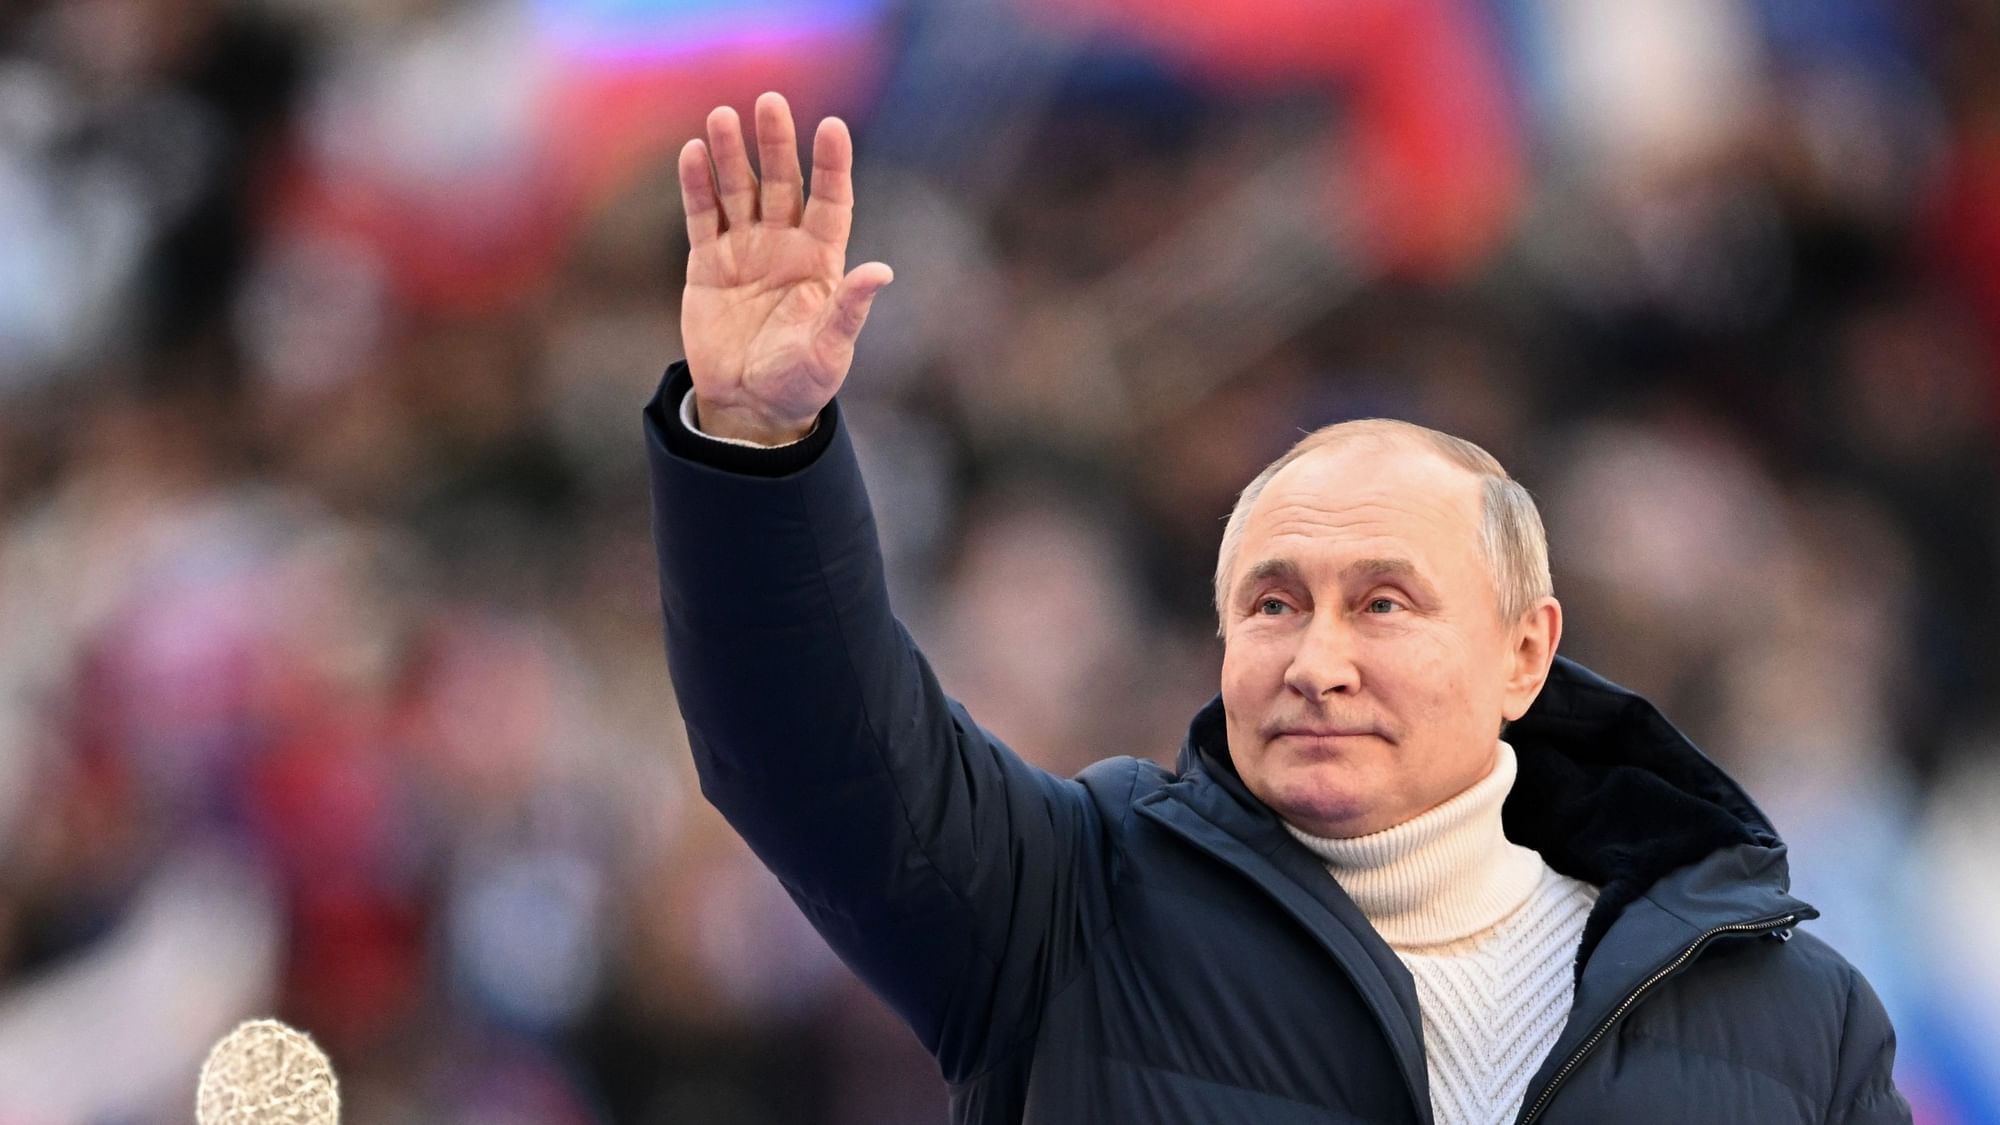 <div class="paragraphs"><p>File photo of Russian President Vladimir Putin </p></div>